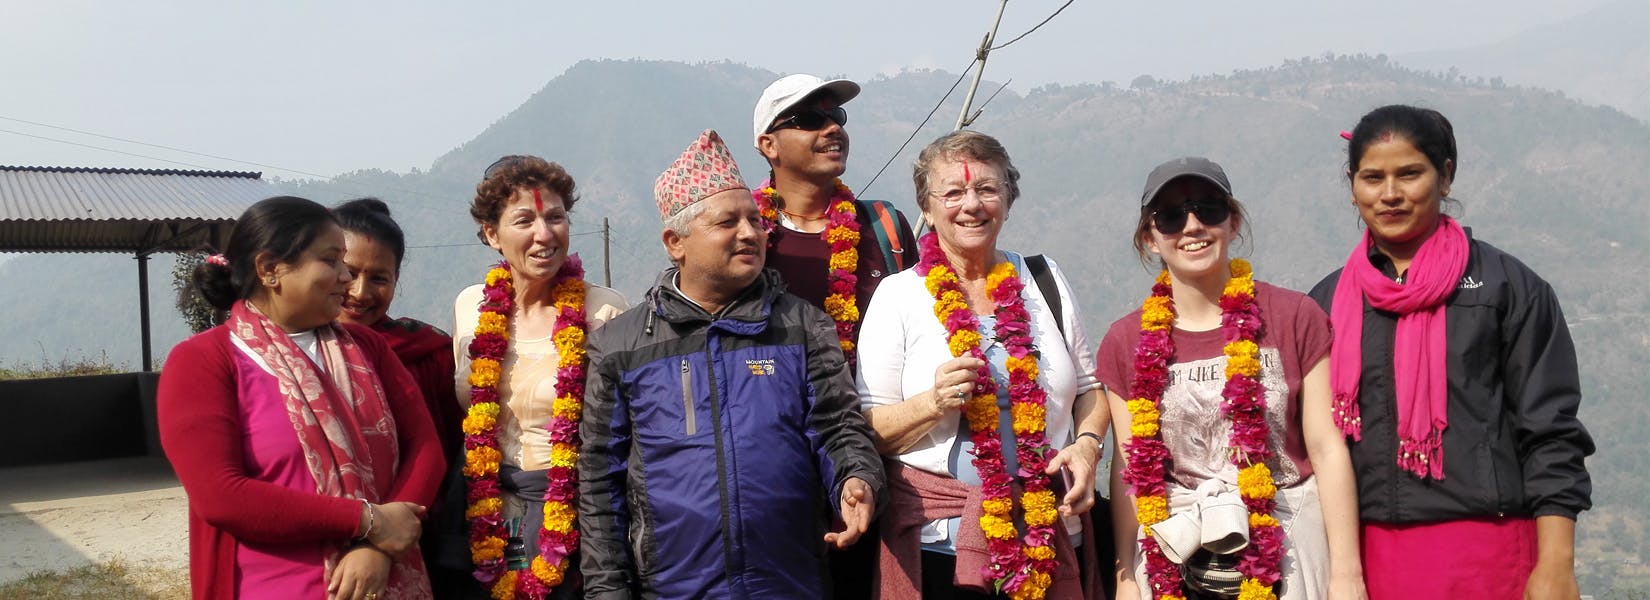 Charity Trekking in Nepal